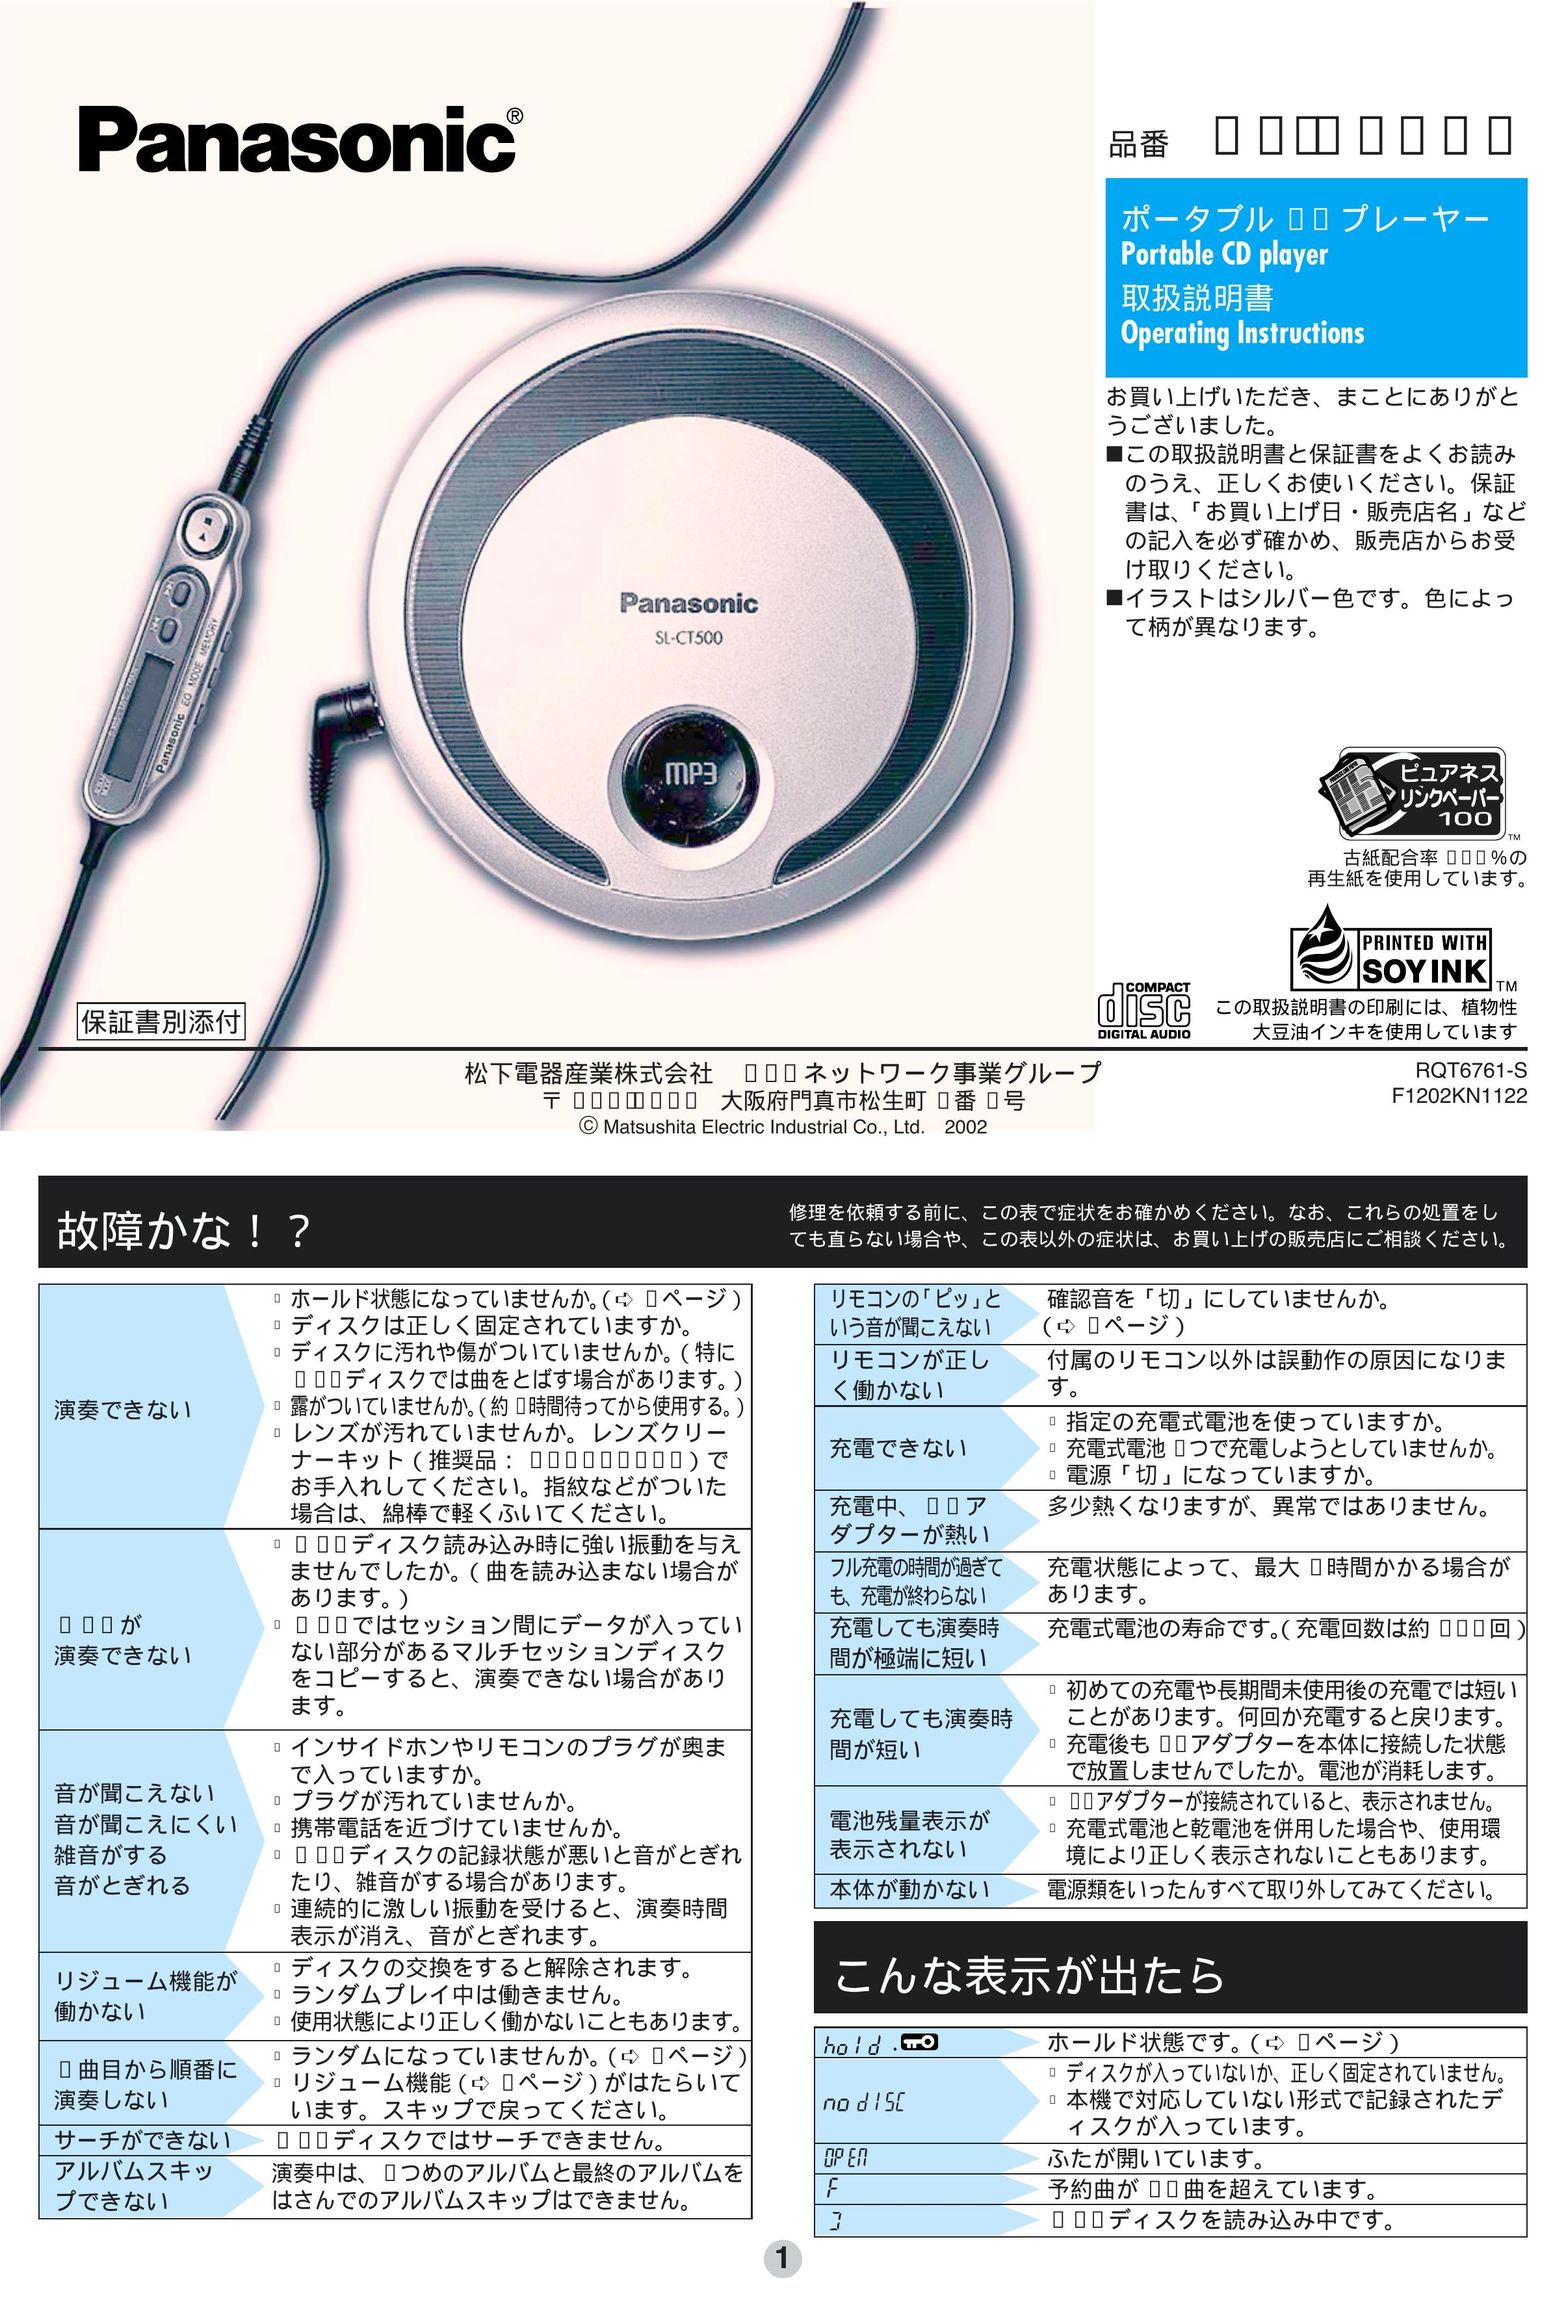 Panasonic SL-CT500 Portable CD Player User Manual